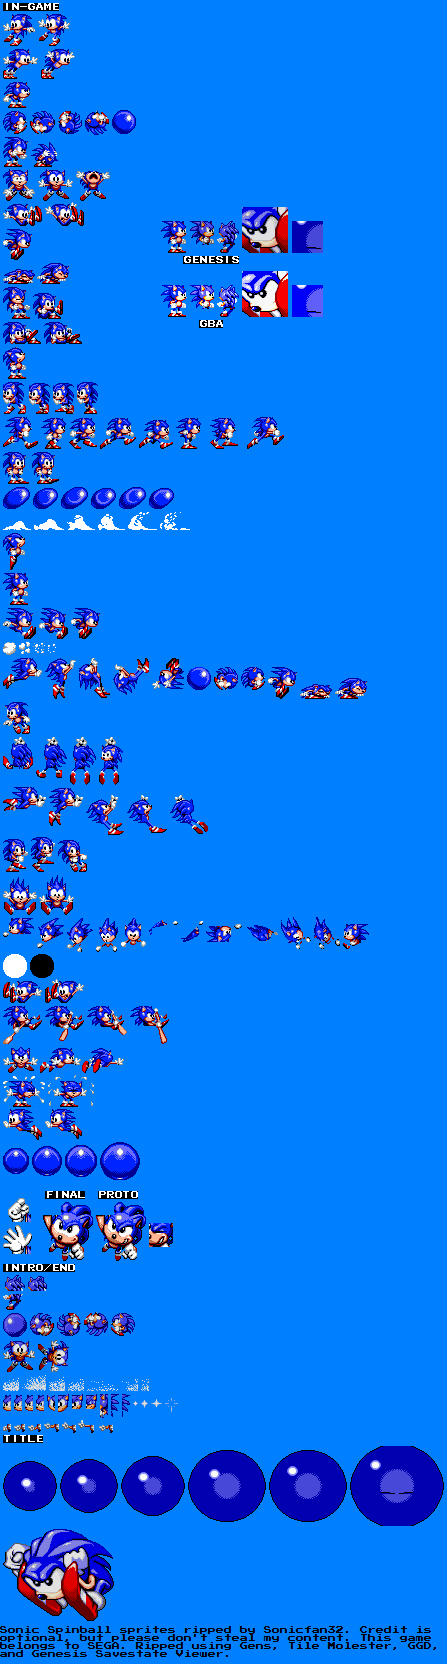 Sonic Spinball - Sonic the Hedgehog